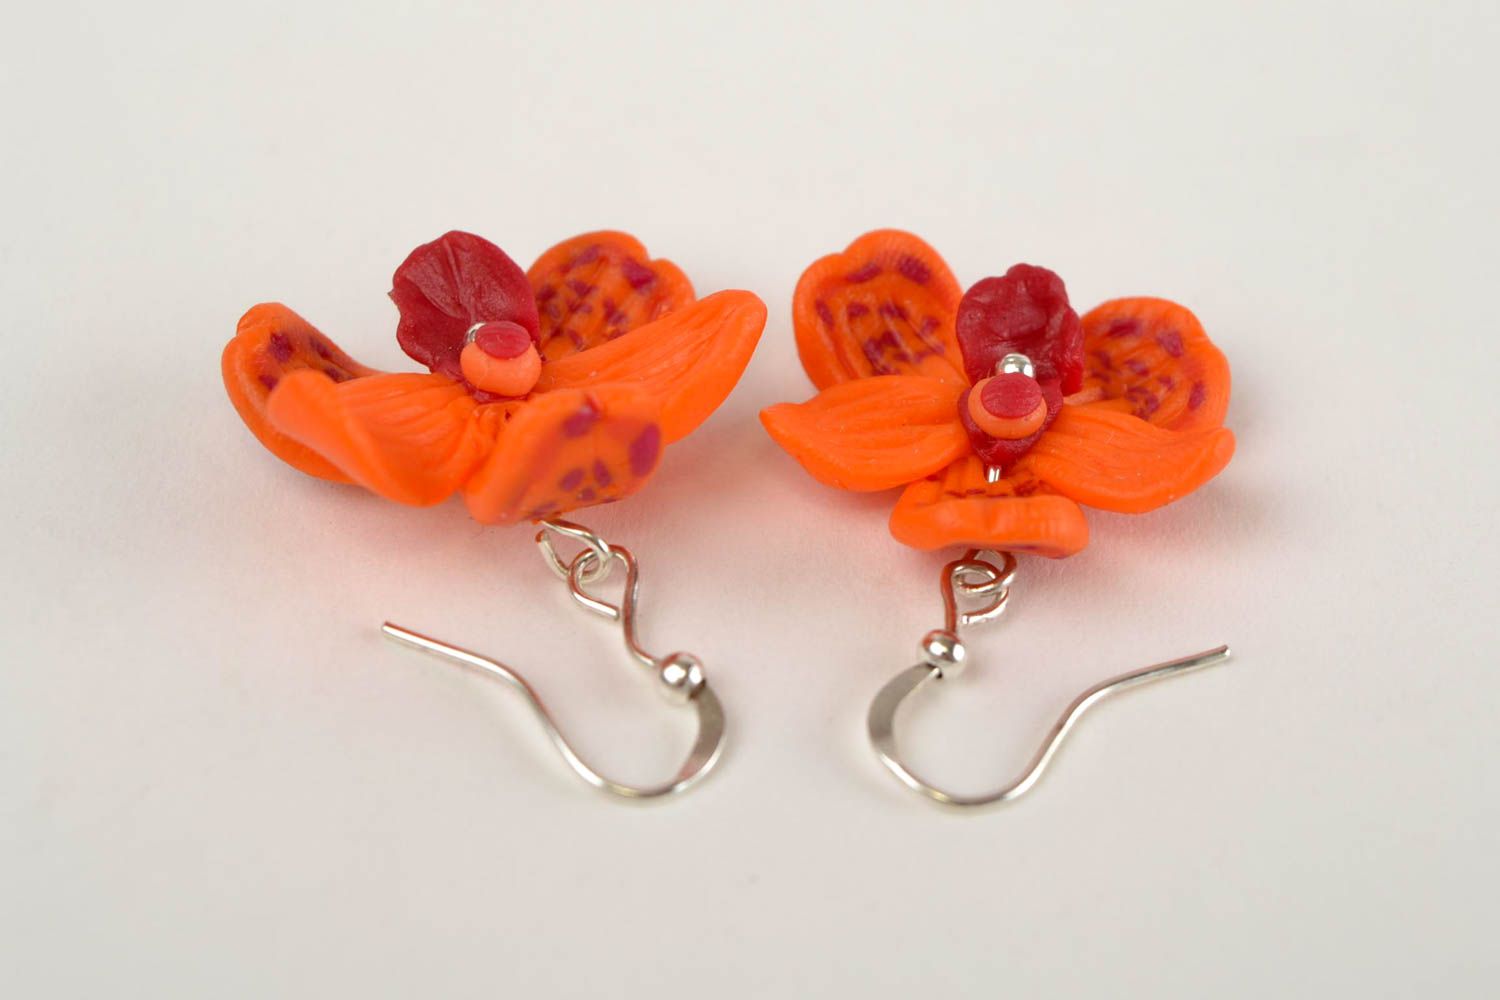 Handmade earrings designer accessory unusual jewelry clay earrings gift ideas photo 4